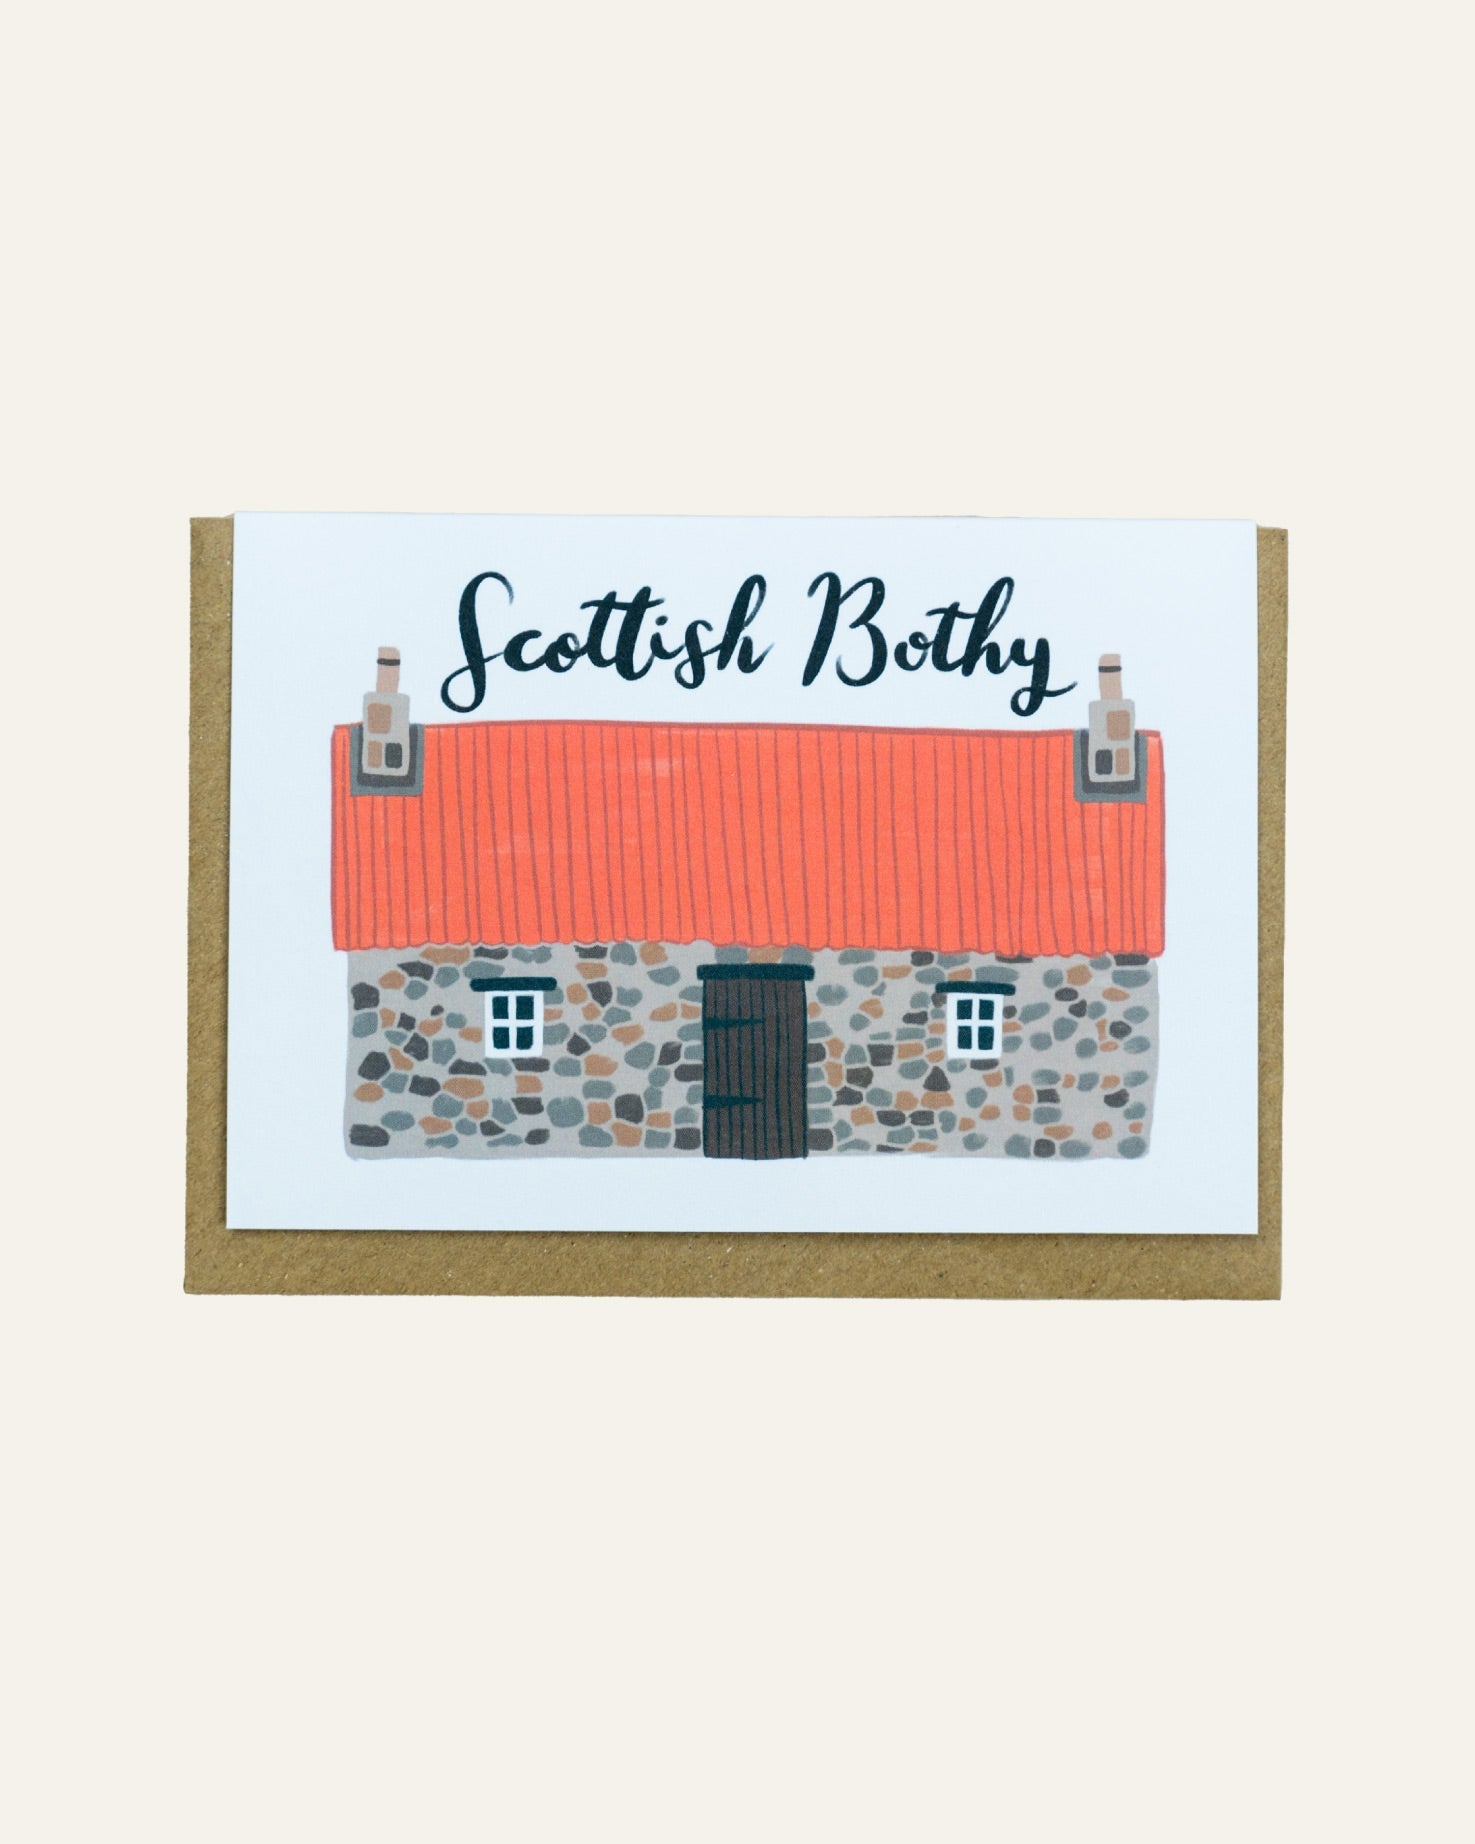 Scottish Bothy Greetings Card - Hidden Scotland